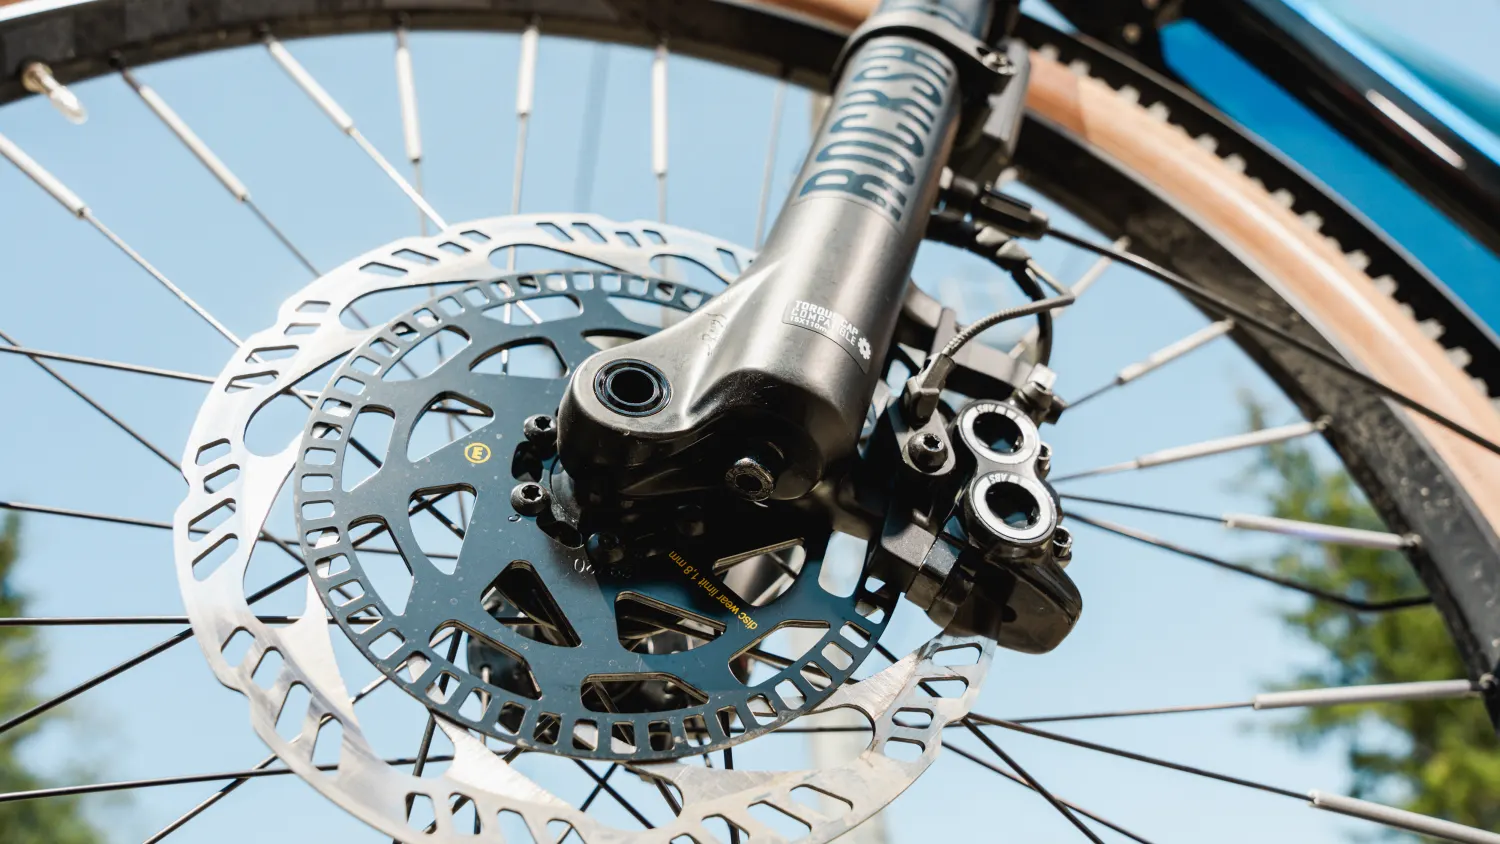 Fahrrad-ABS: So sollen E-Bikes sicherer bremsen - WELT